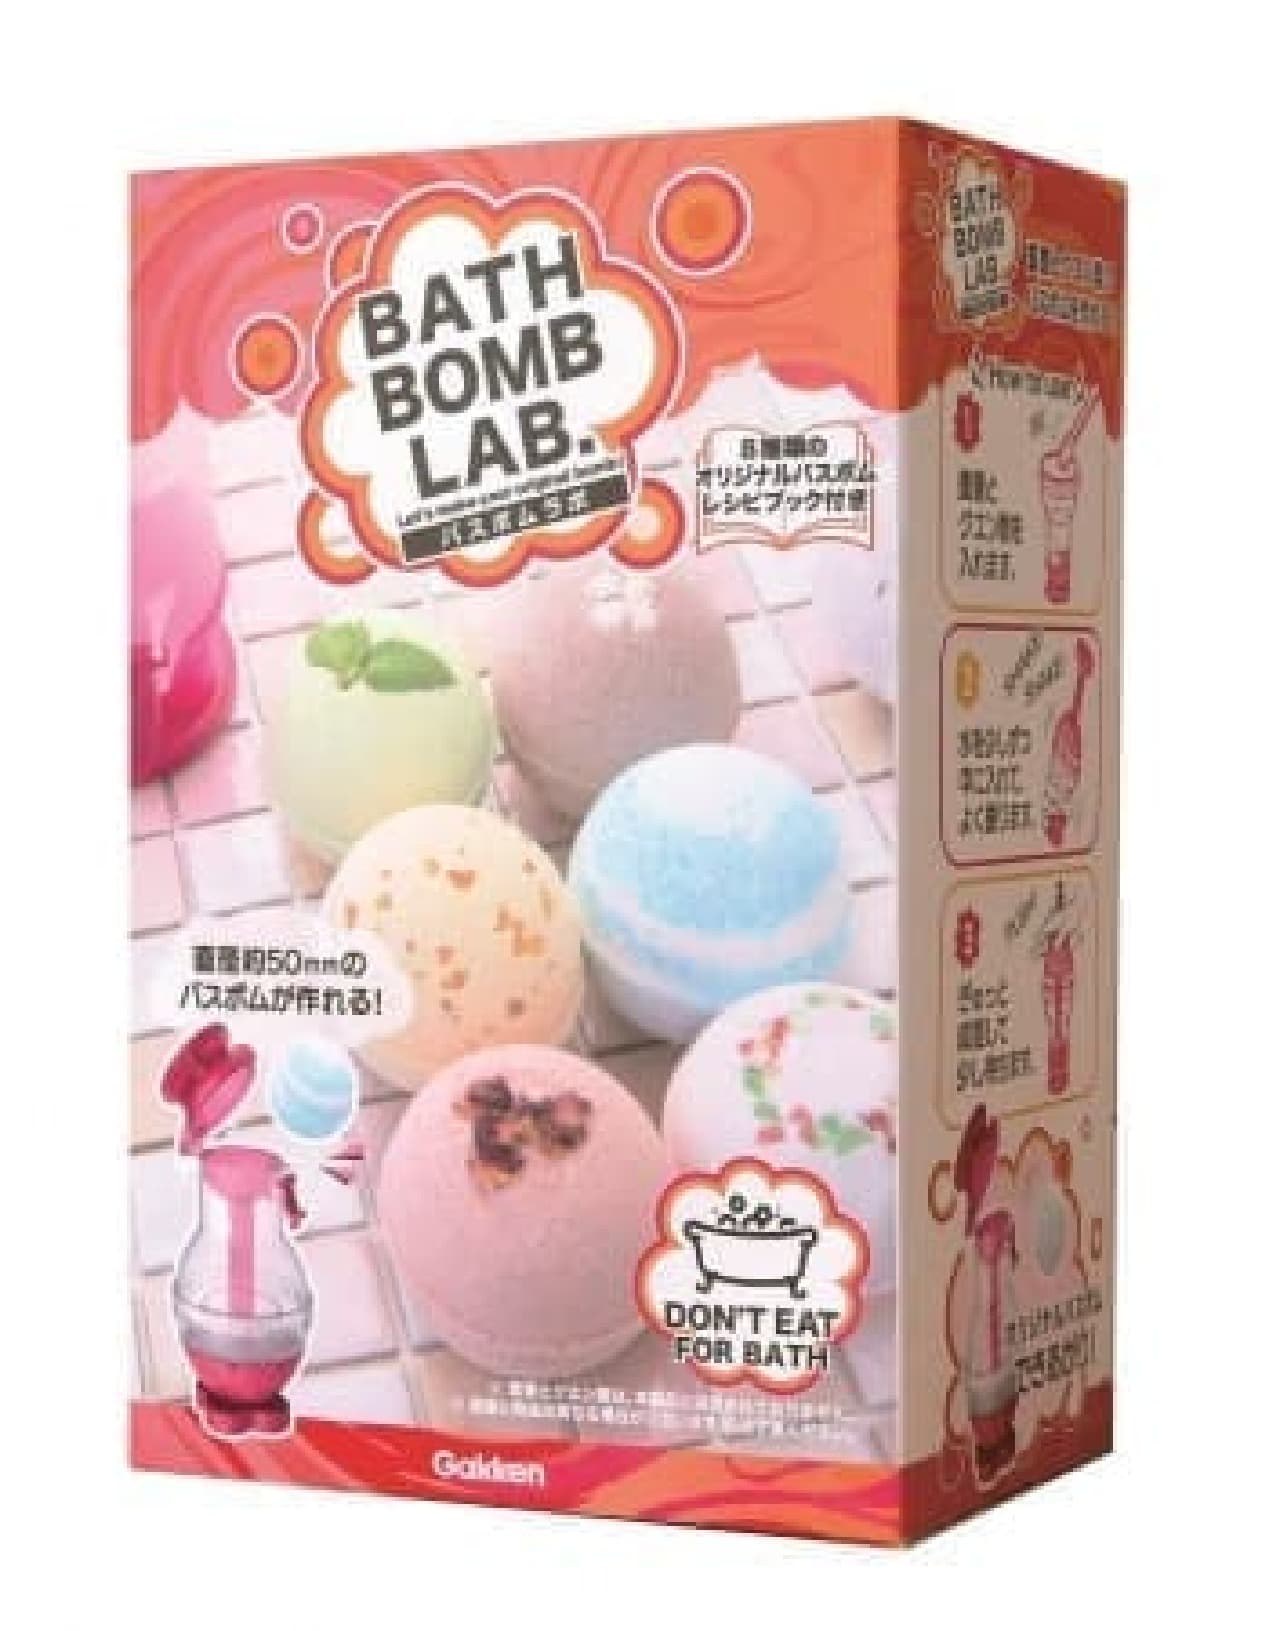 "Bath bomb lab", a kit that allows you to make handmade bath bombs (carbonated bath salts)